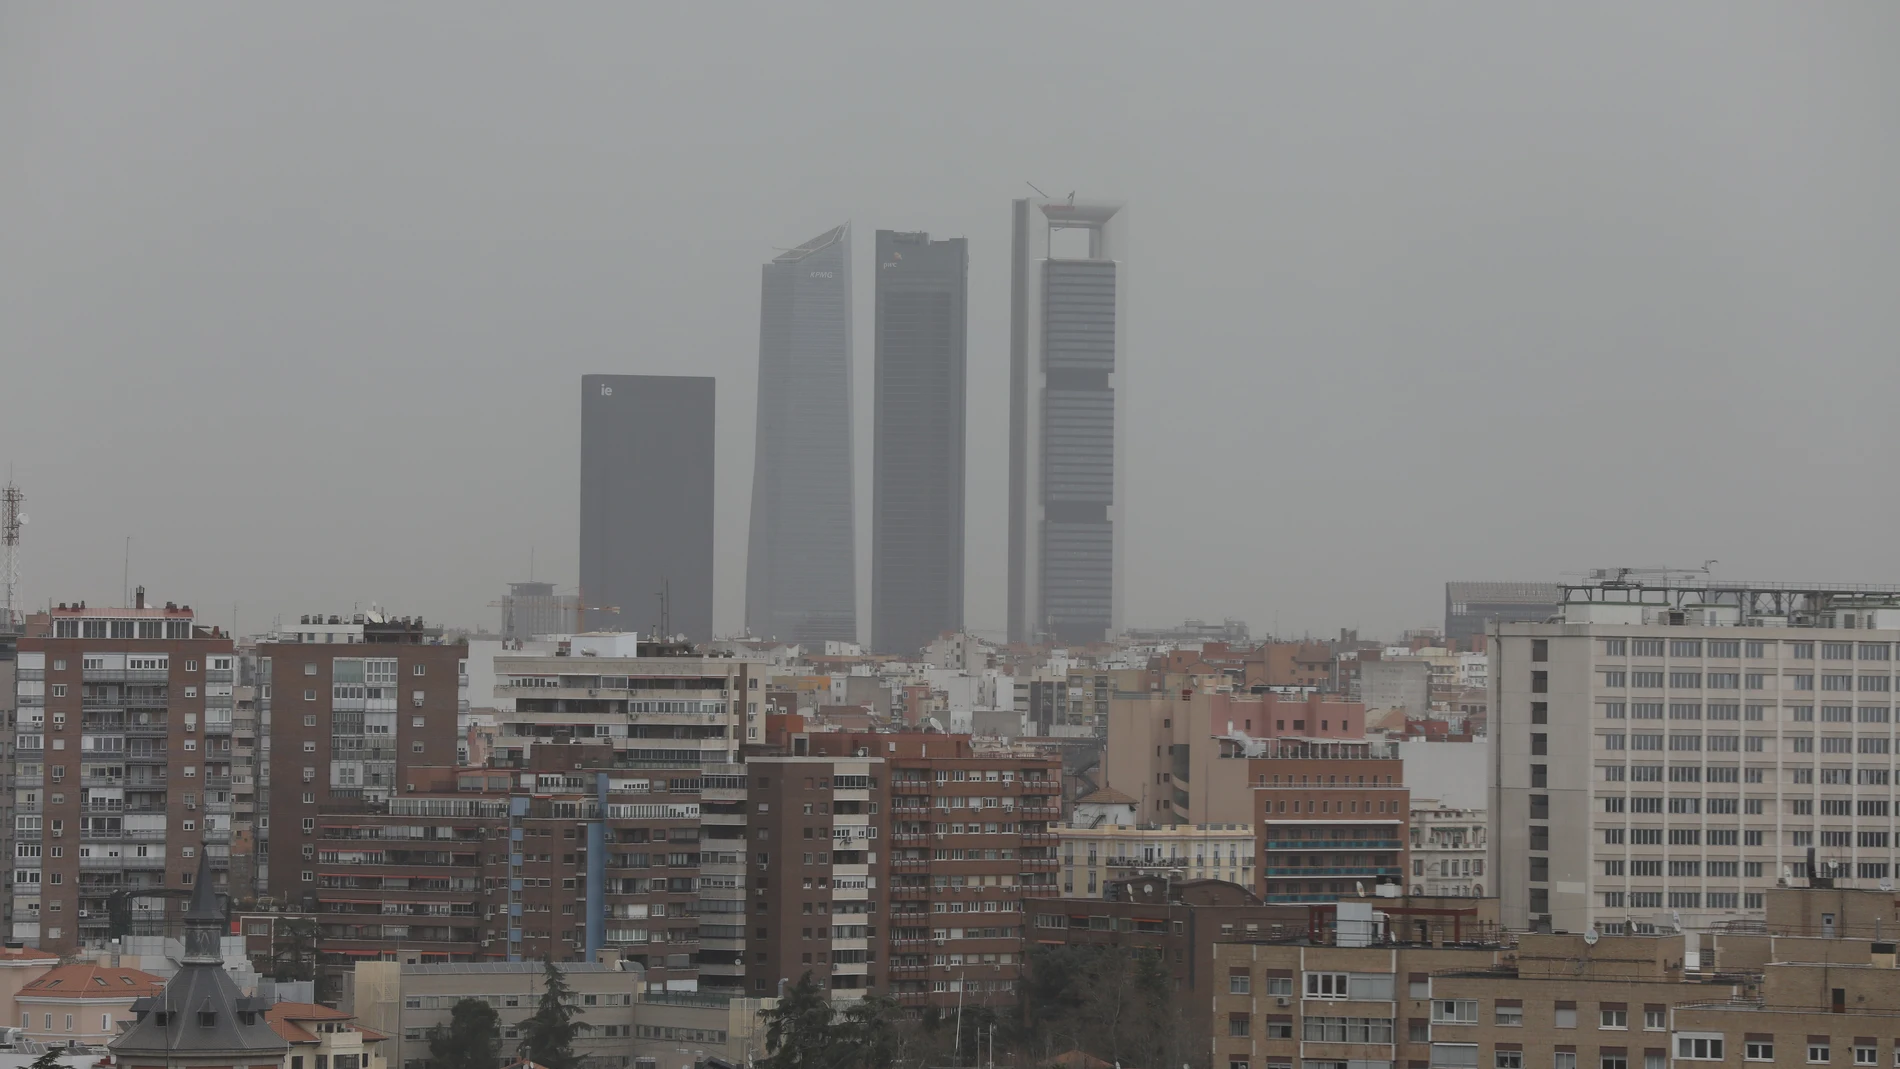 Vista de Madrid